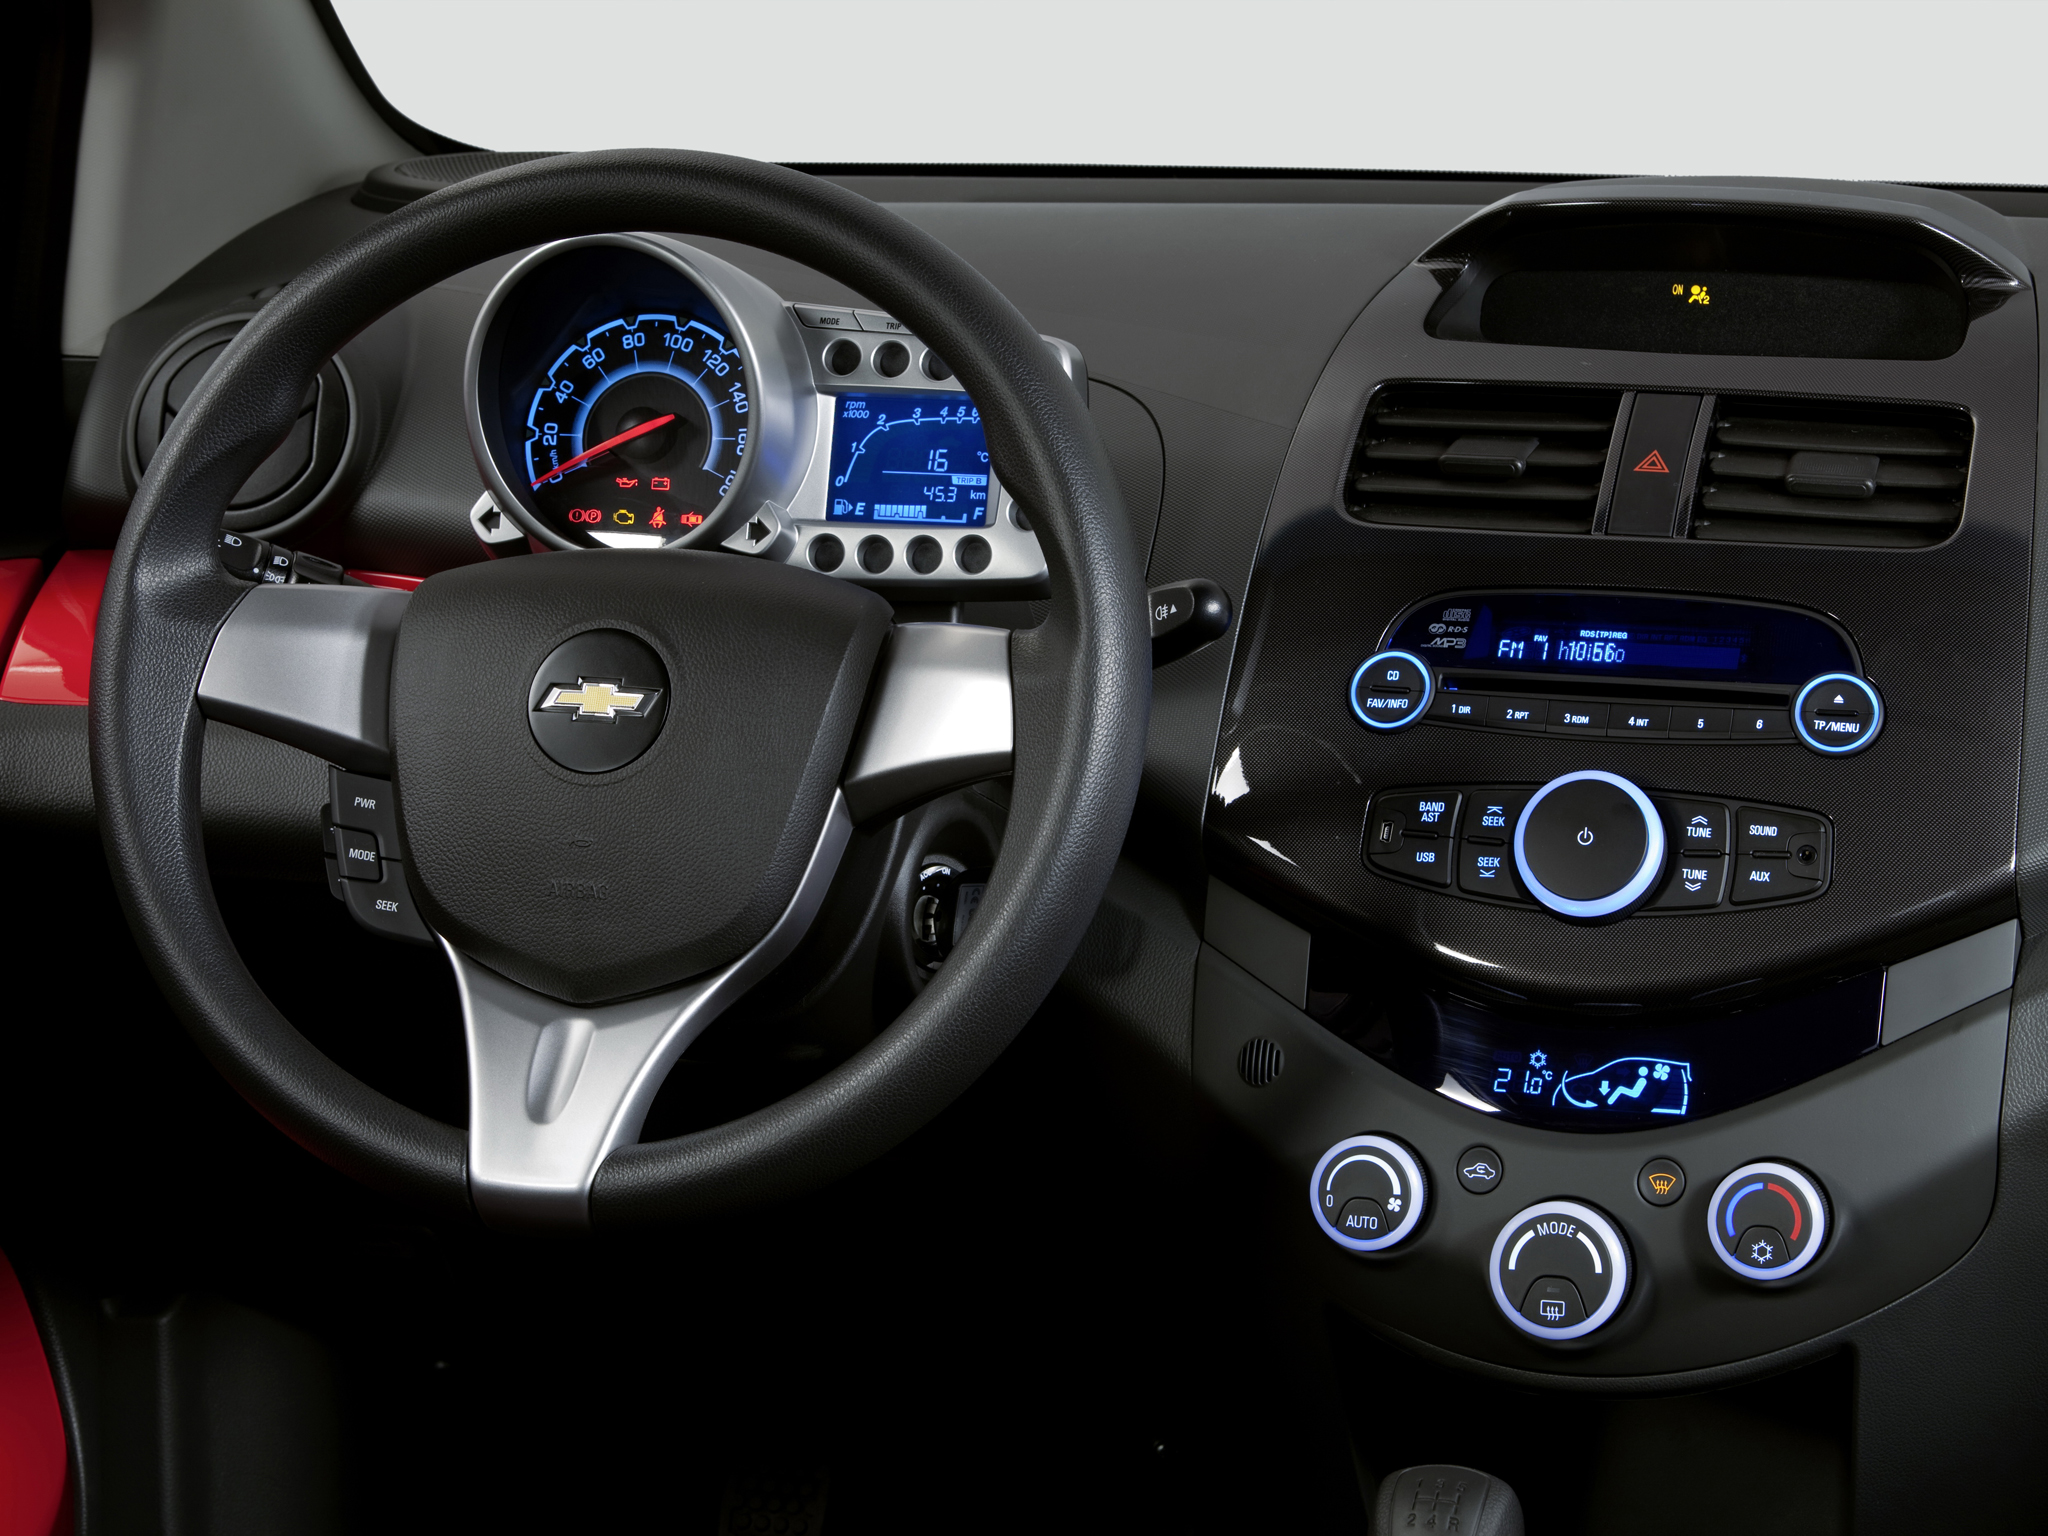 Chevrolet Spark 2010 Interior